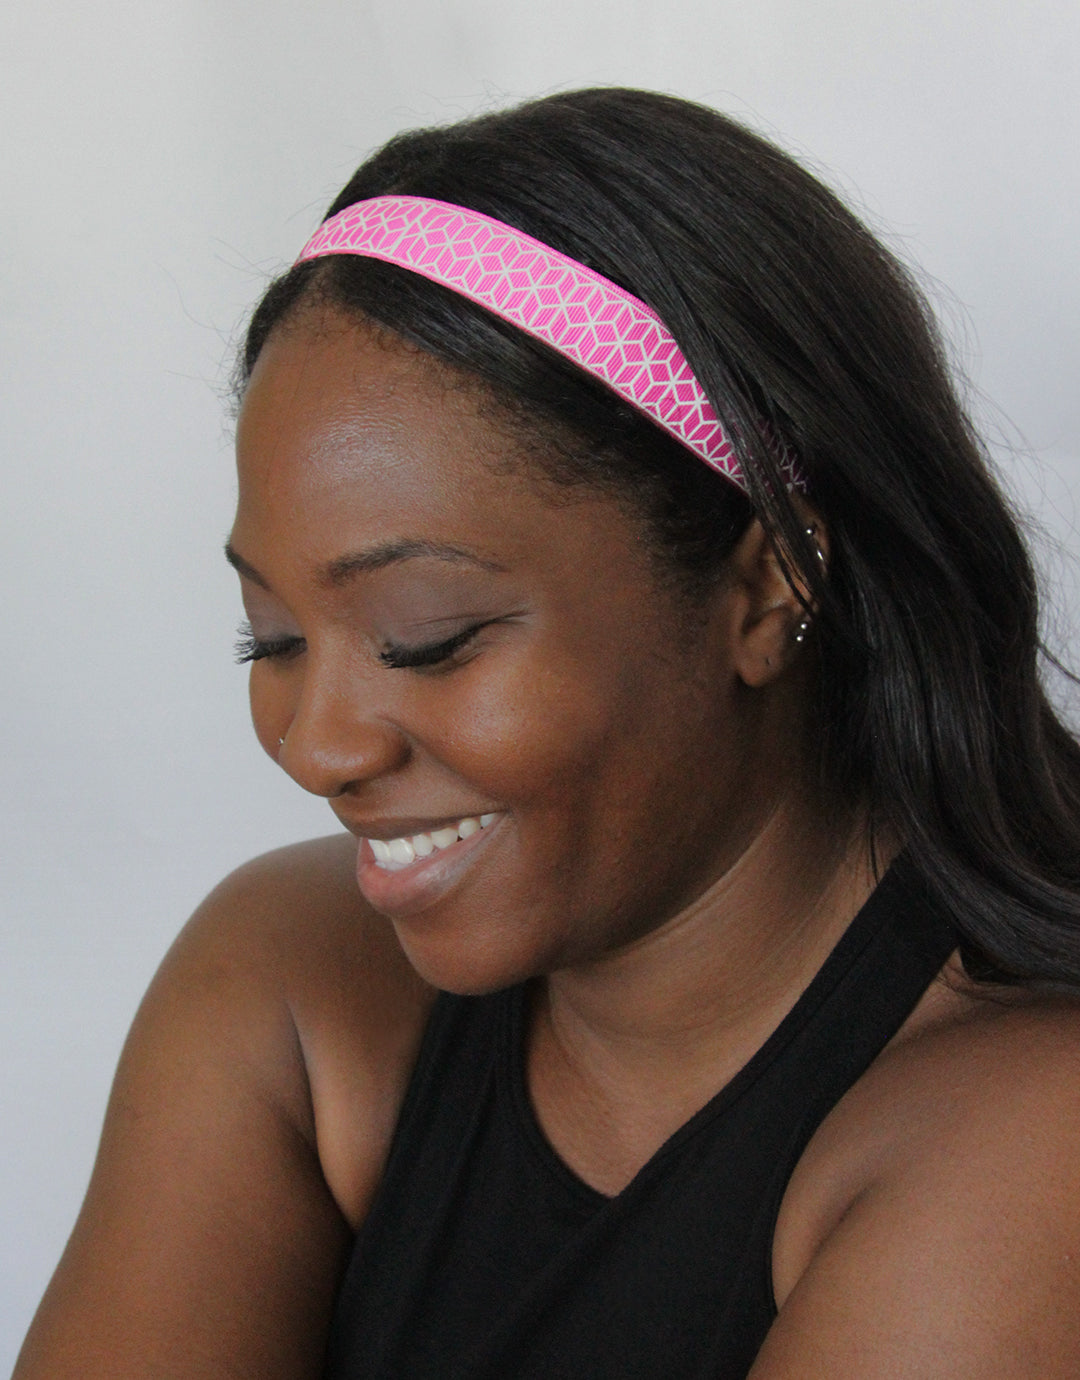 BANDED Women’s Premium Headbands + Hair Accessories - Raspberry - Reflective Athletic Headband